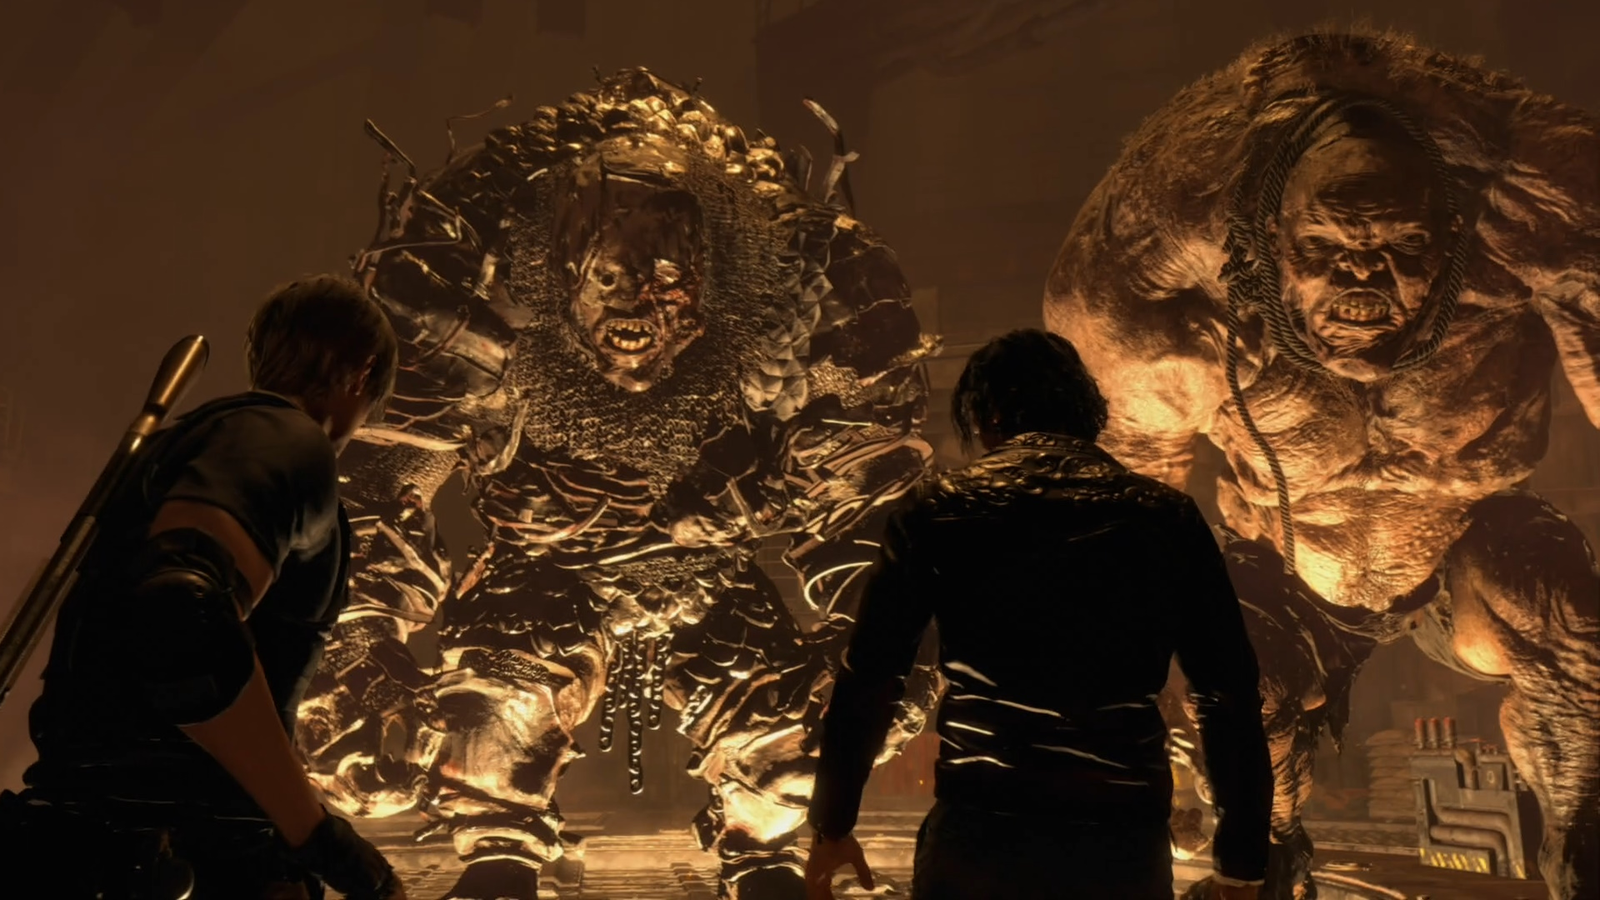 Resident Evil 4 Guide Separate Ways DLC Walkthrough, Separate Ways DLC  Remake Unlockables - News